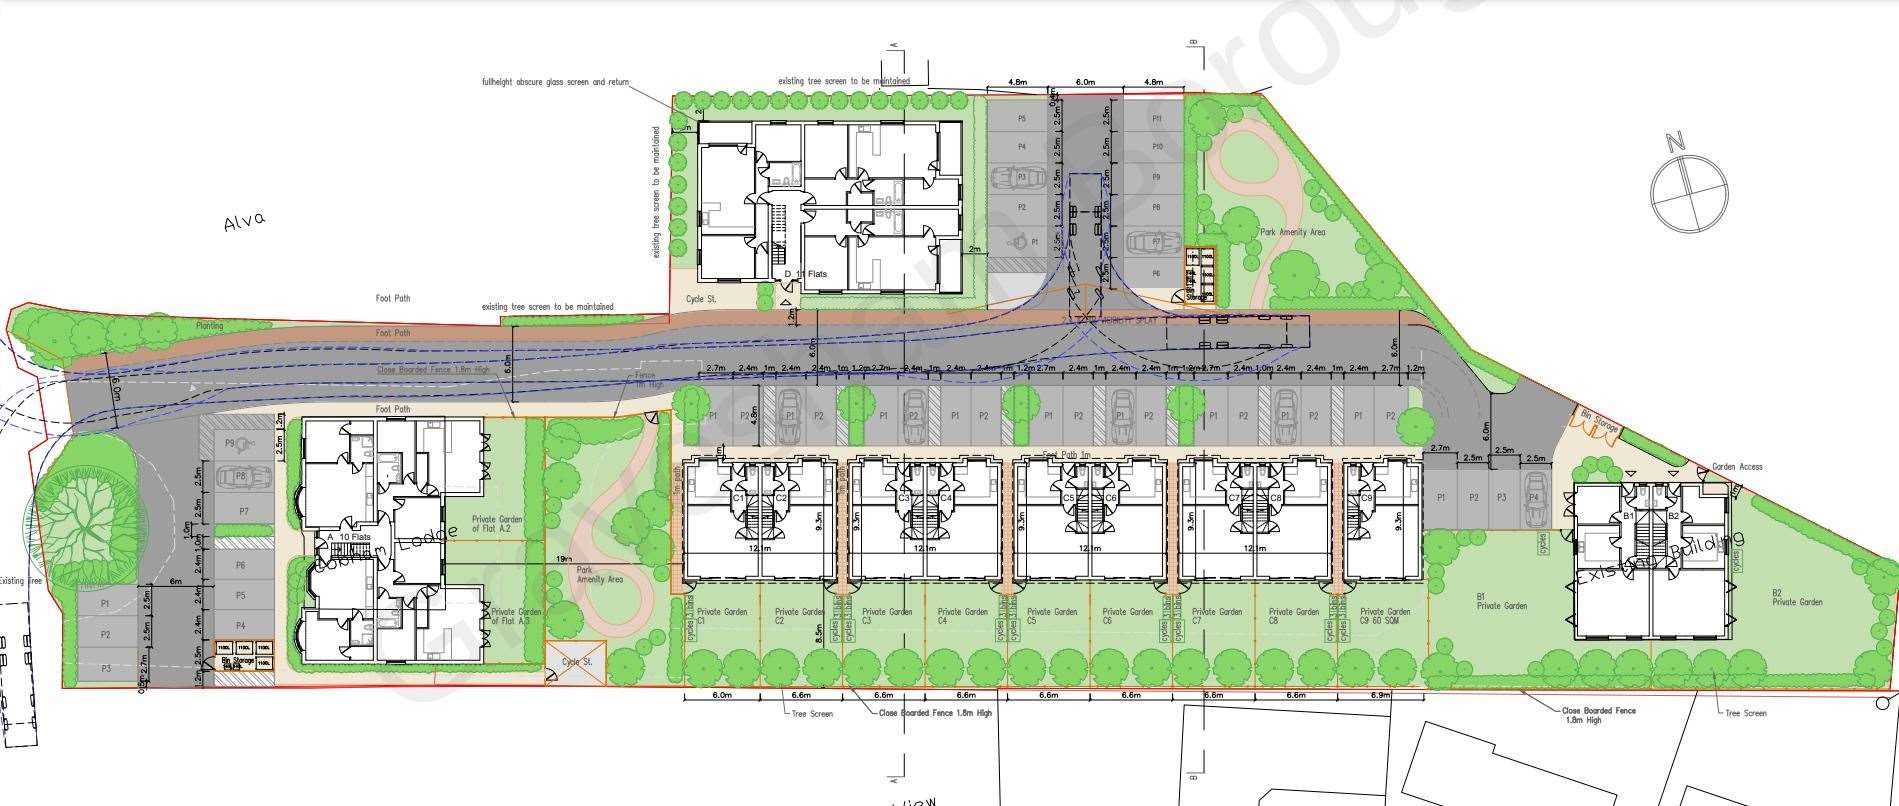 The proposed plan. Picture: Gravesham Borough Council / Breley Design